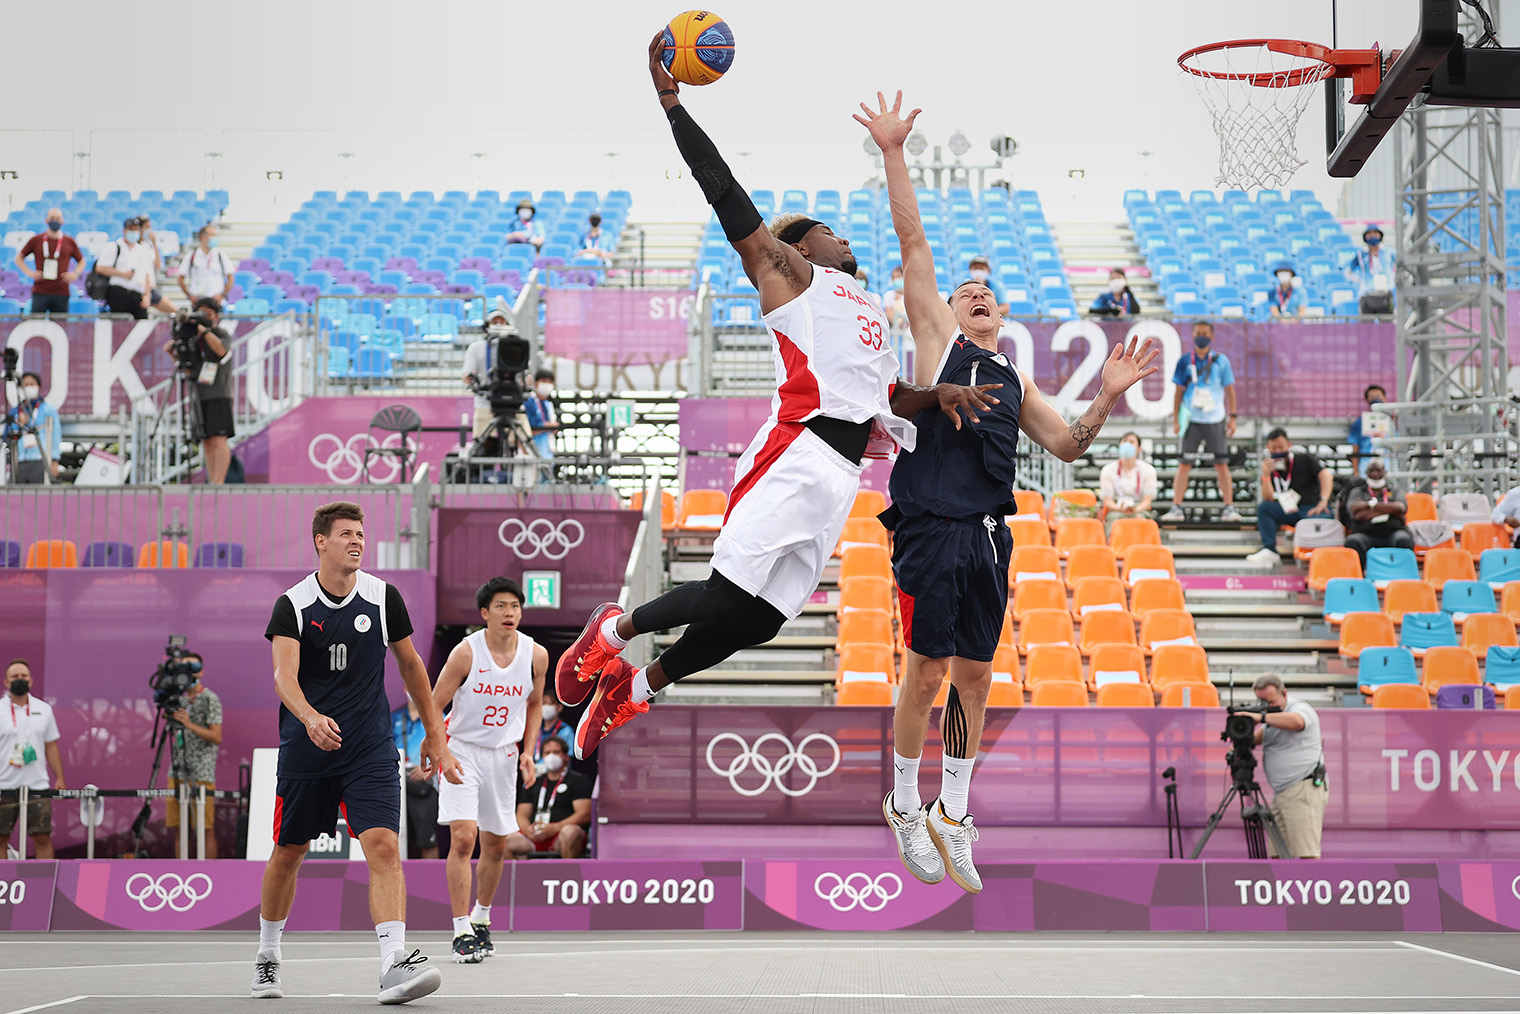 Матч по баскетболу 3x3 на Олимпиаде 2020 года в Токио между Японией и спортсменами Олимпийского комитета России. Фотография: Christian Petersen / Getty Images